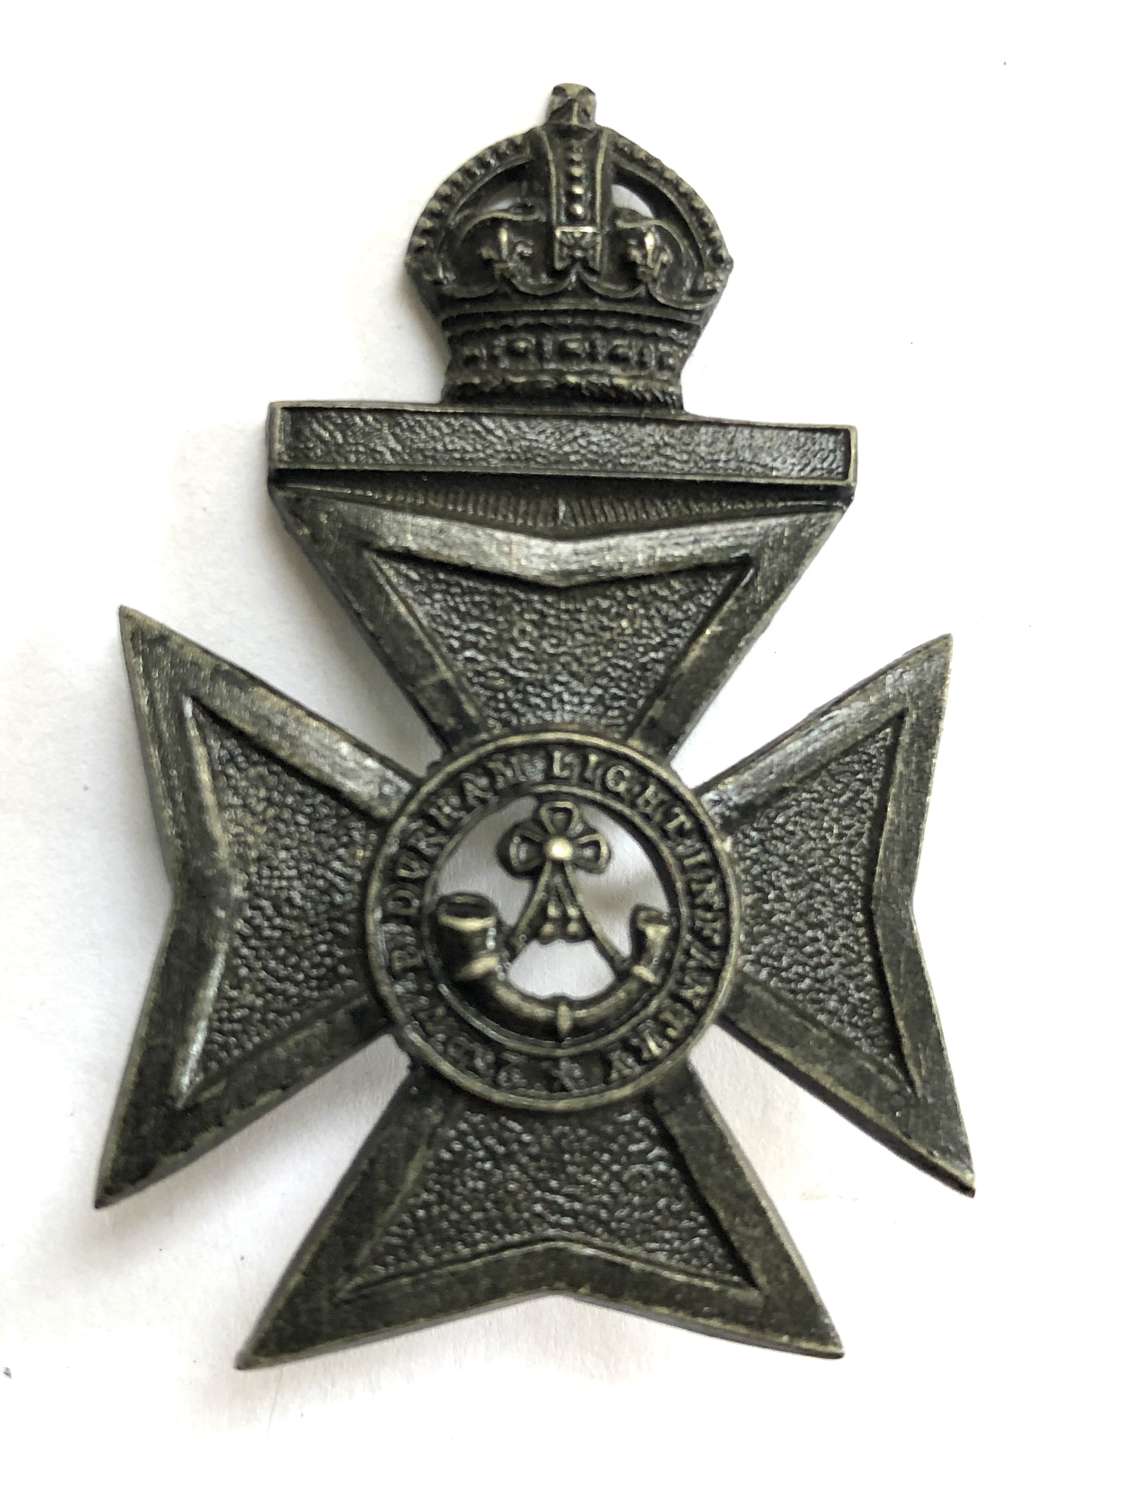 2nd VB Durham Light Infantry Edwardian OR’s cap badge circa 1902-08